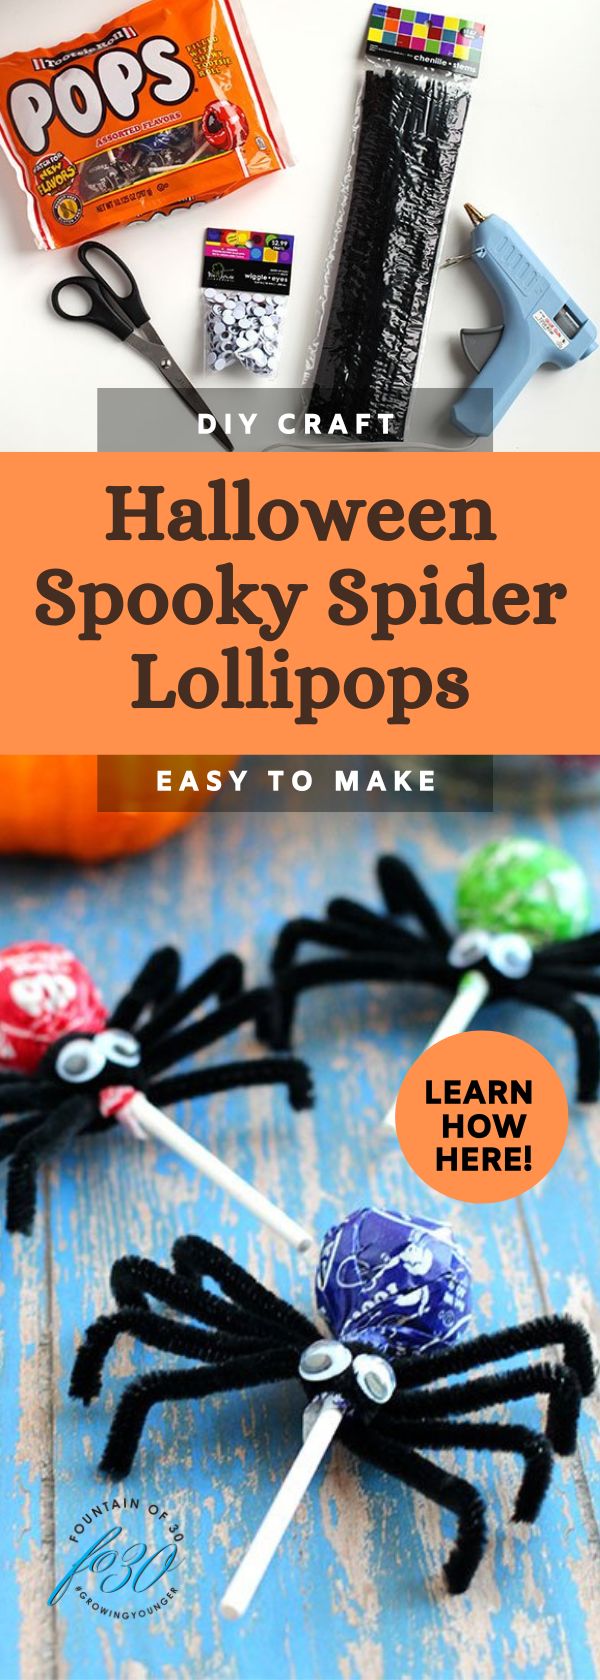 lollipop pipe cleaner leg spider treats for halloween fountainof30